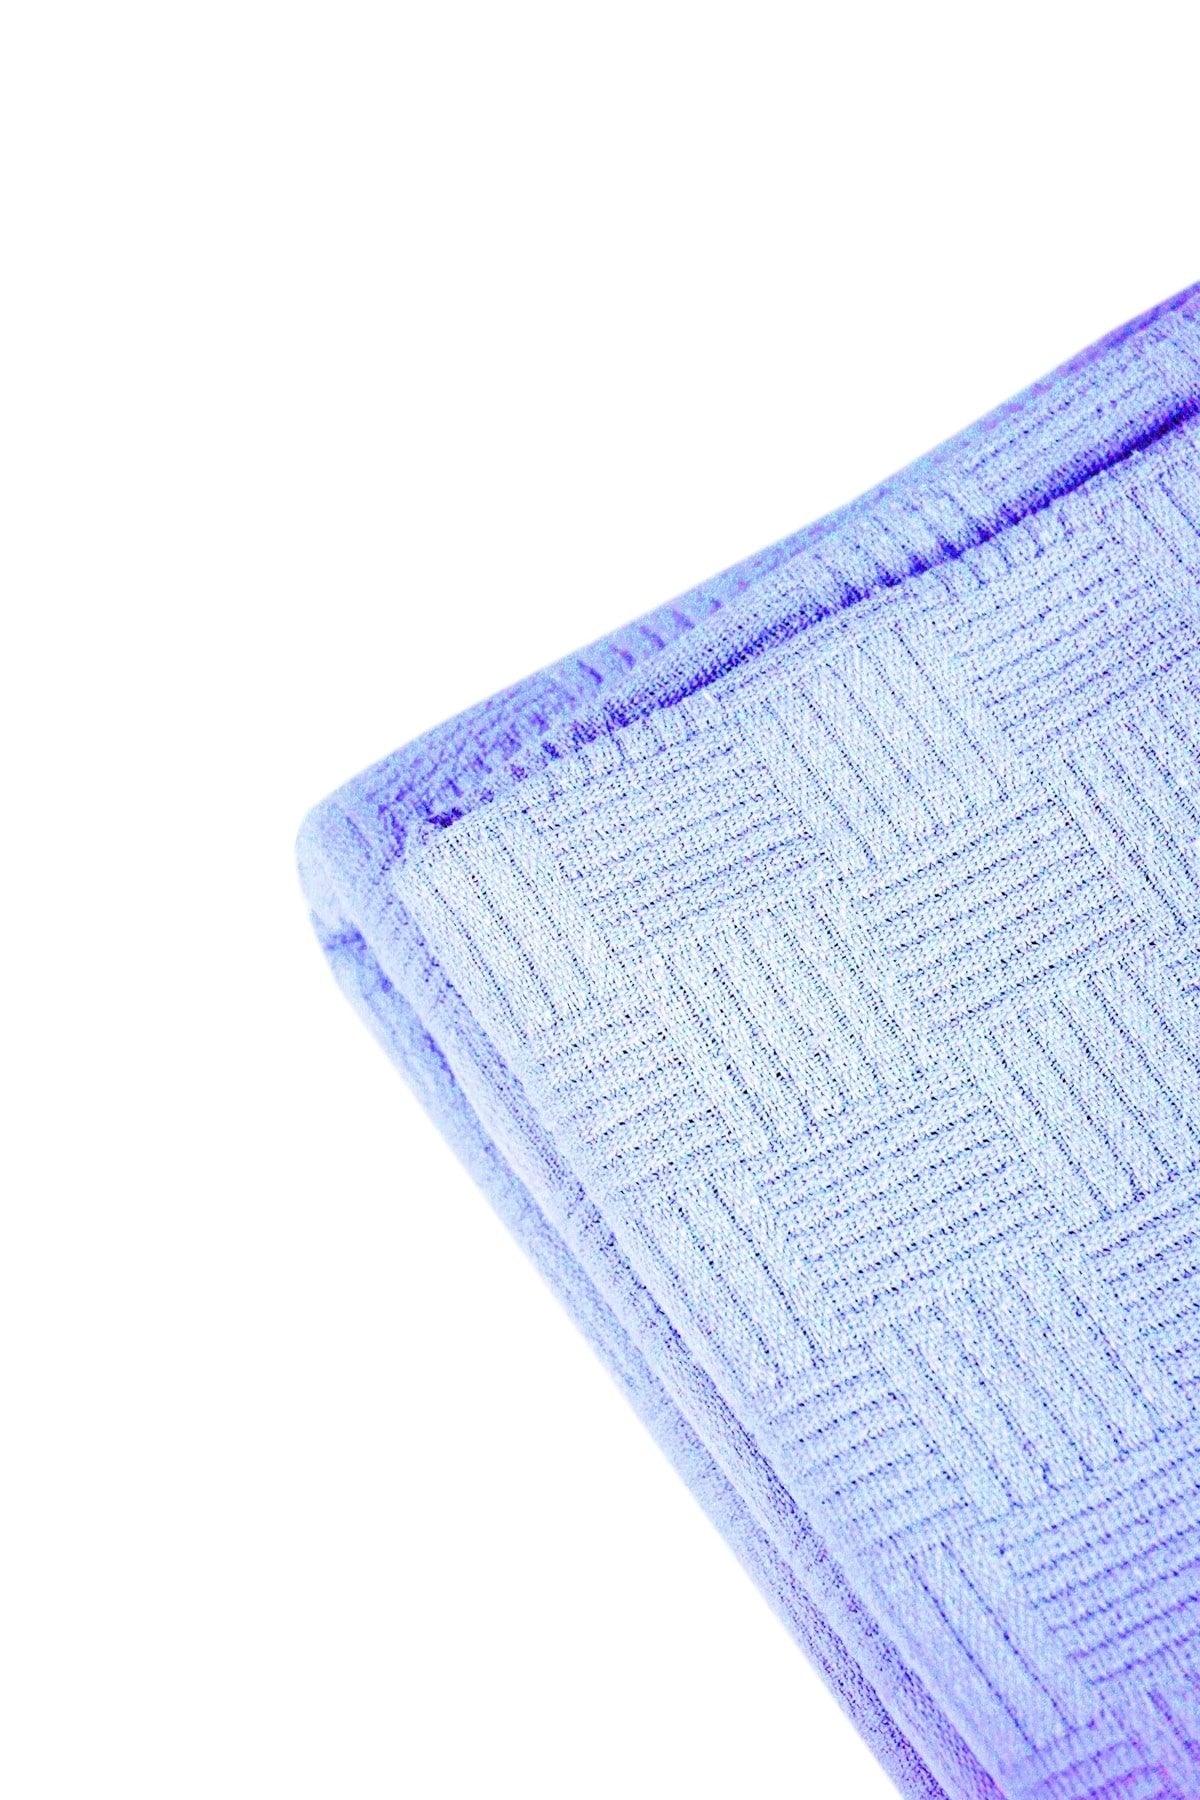 Checker Pattern Cotton Single Pique And Bedspread -blue - Swordslife